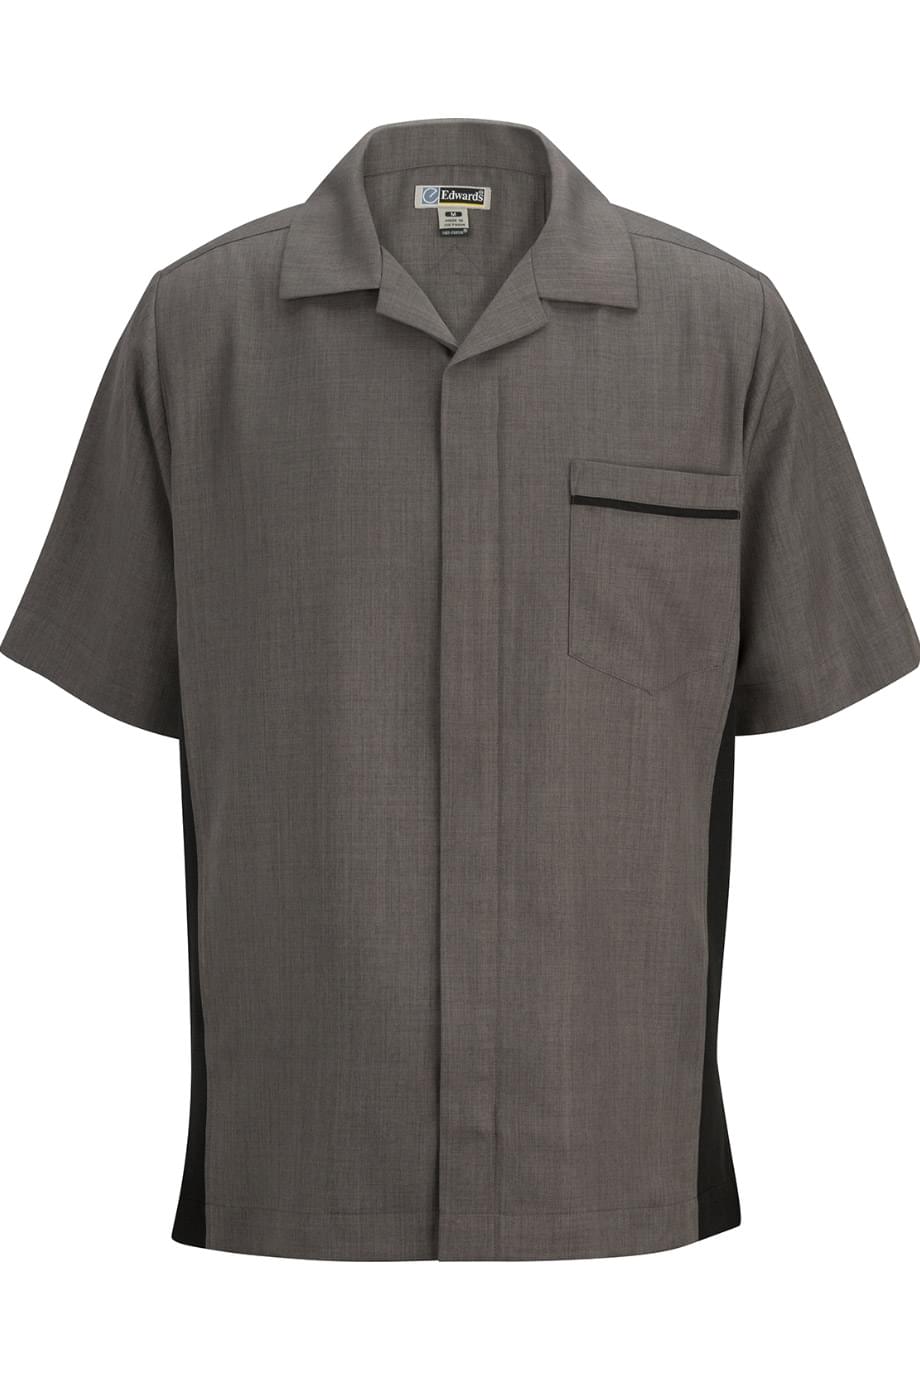 Edwards S Graphite Premier Men's Housekeeping Service Shirt